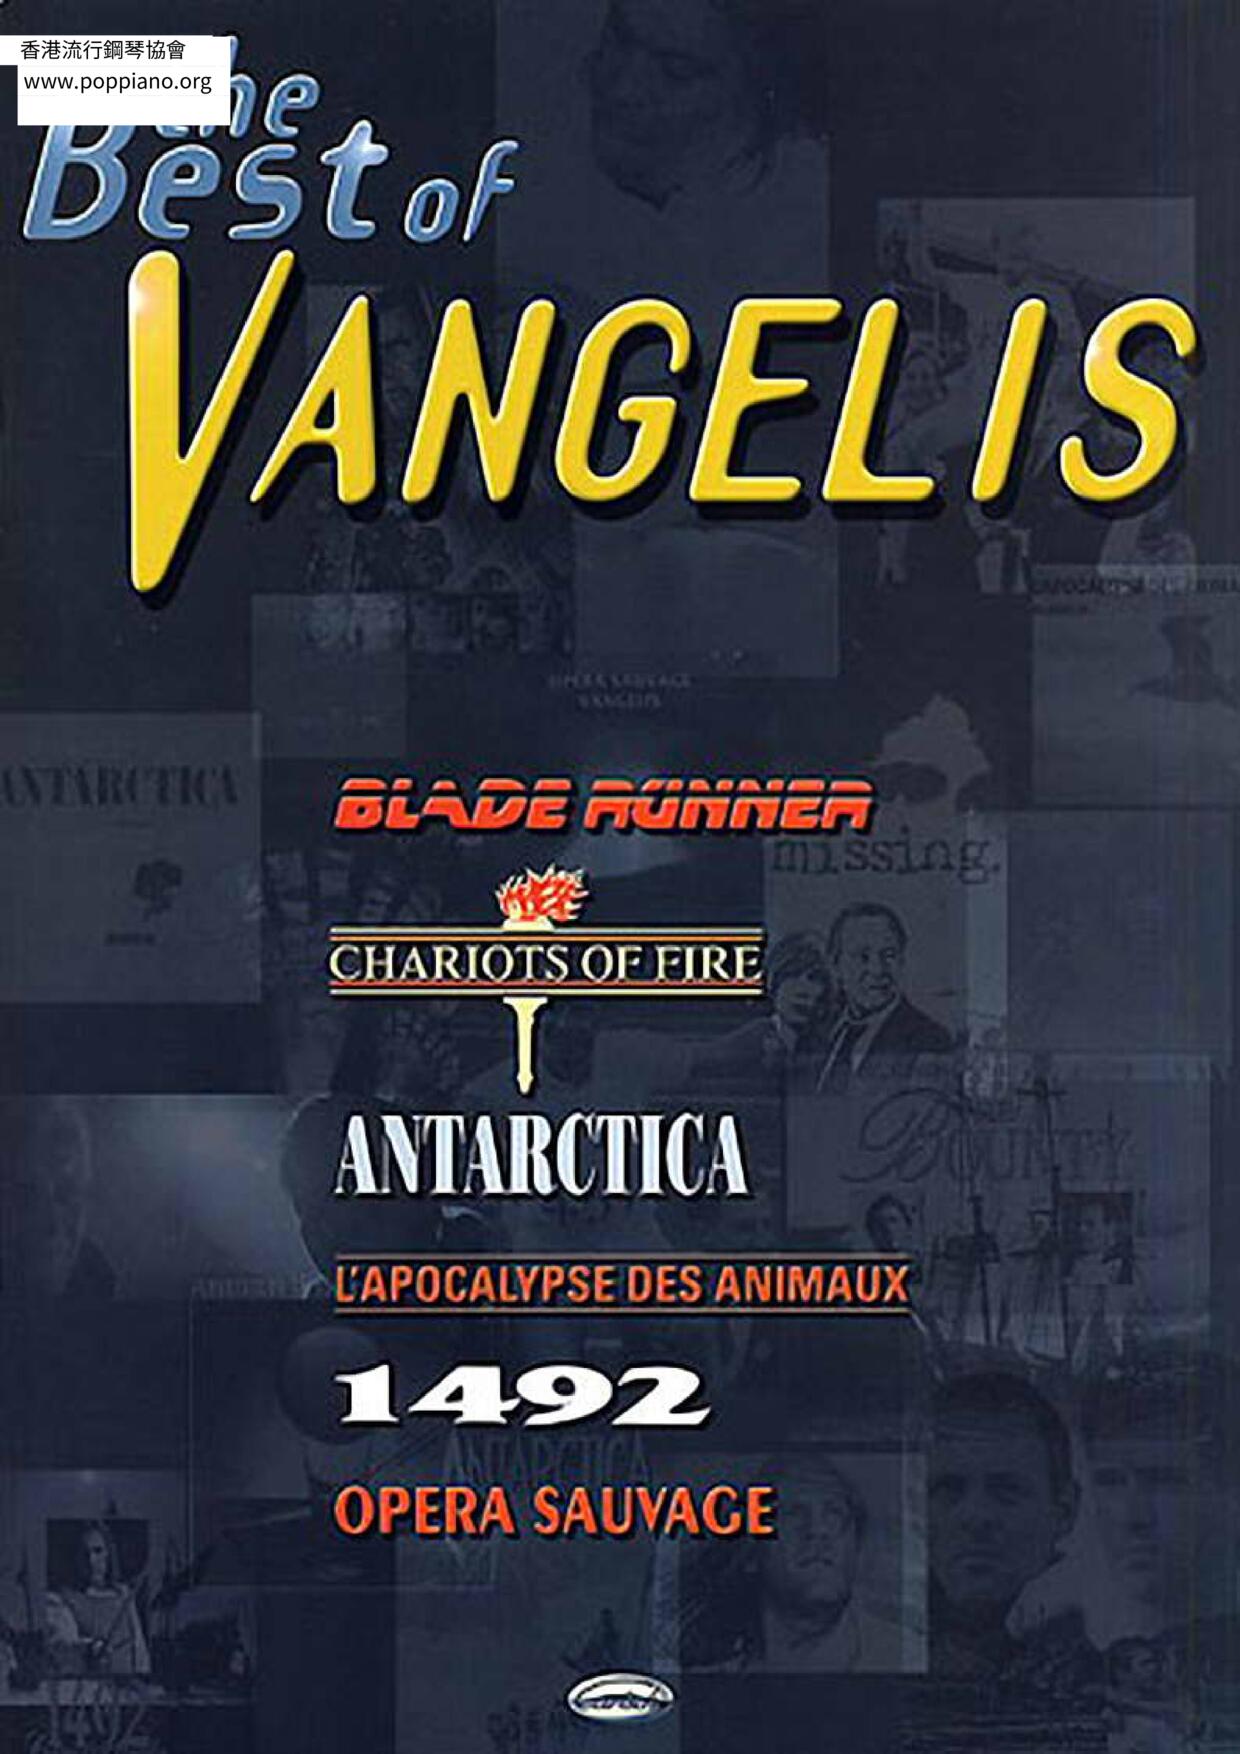 The Best Of Vangelis 57 pages琴谱